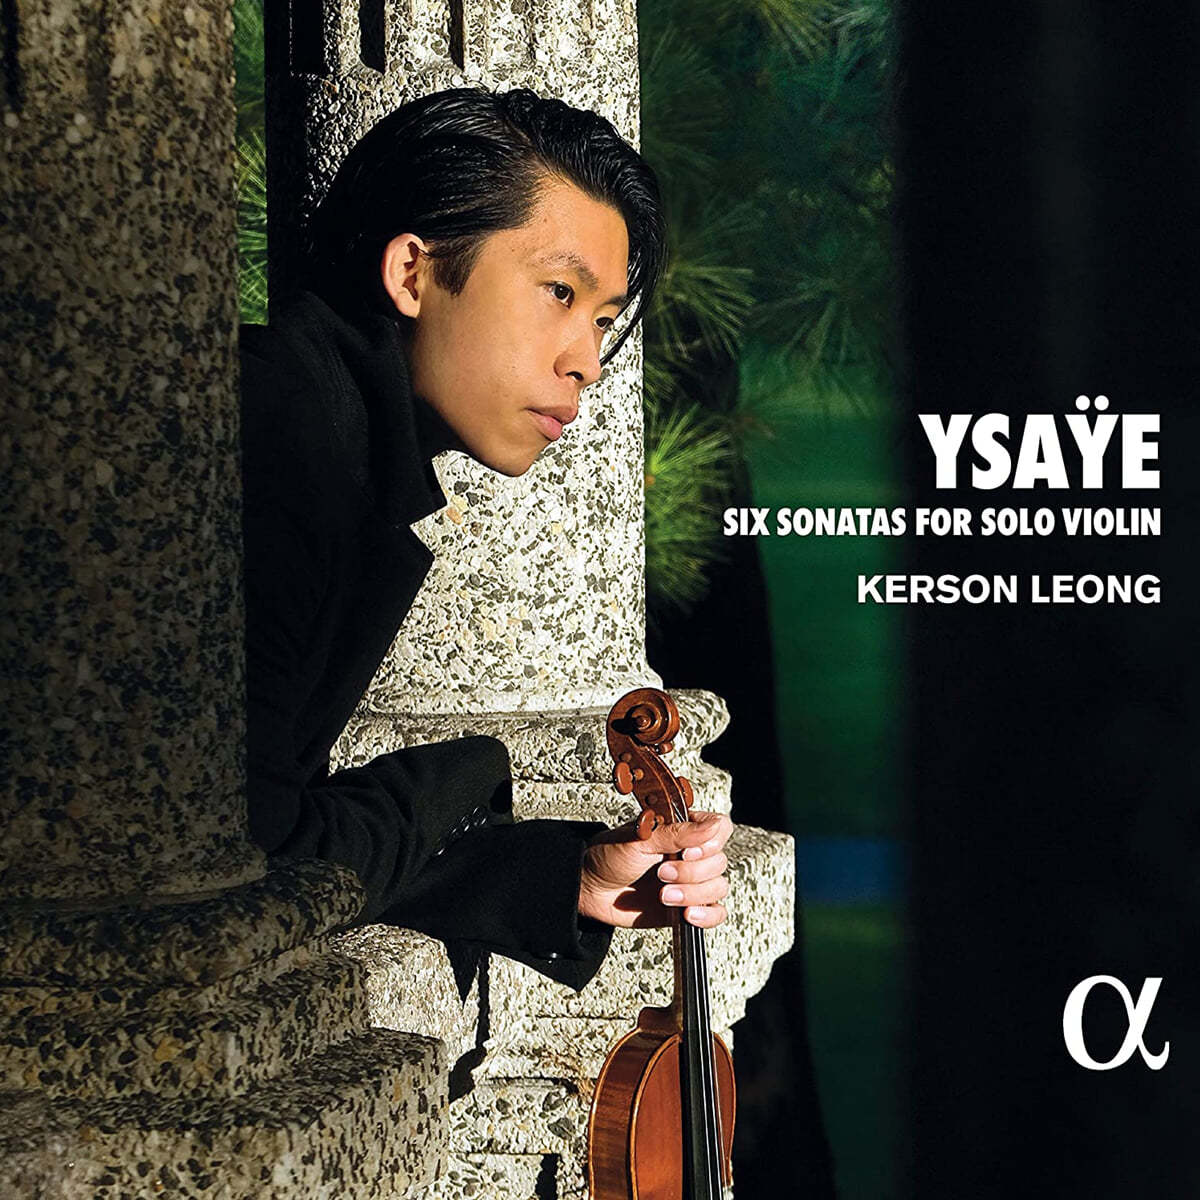 Kerson Leong 이자이: 무반주 바이올린 소나타 전곡 (Ysaye: Six Sonatas For Solo Violin) 